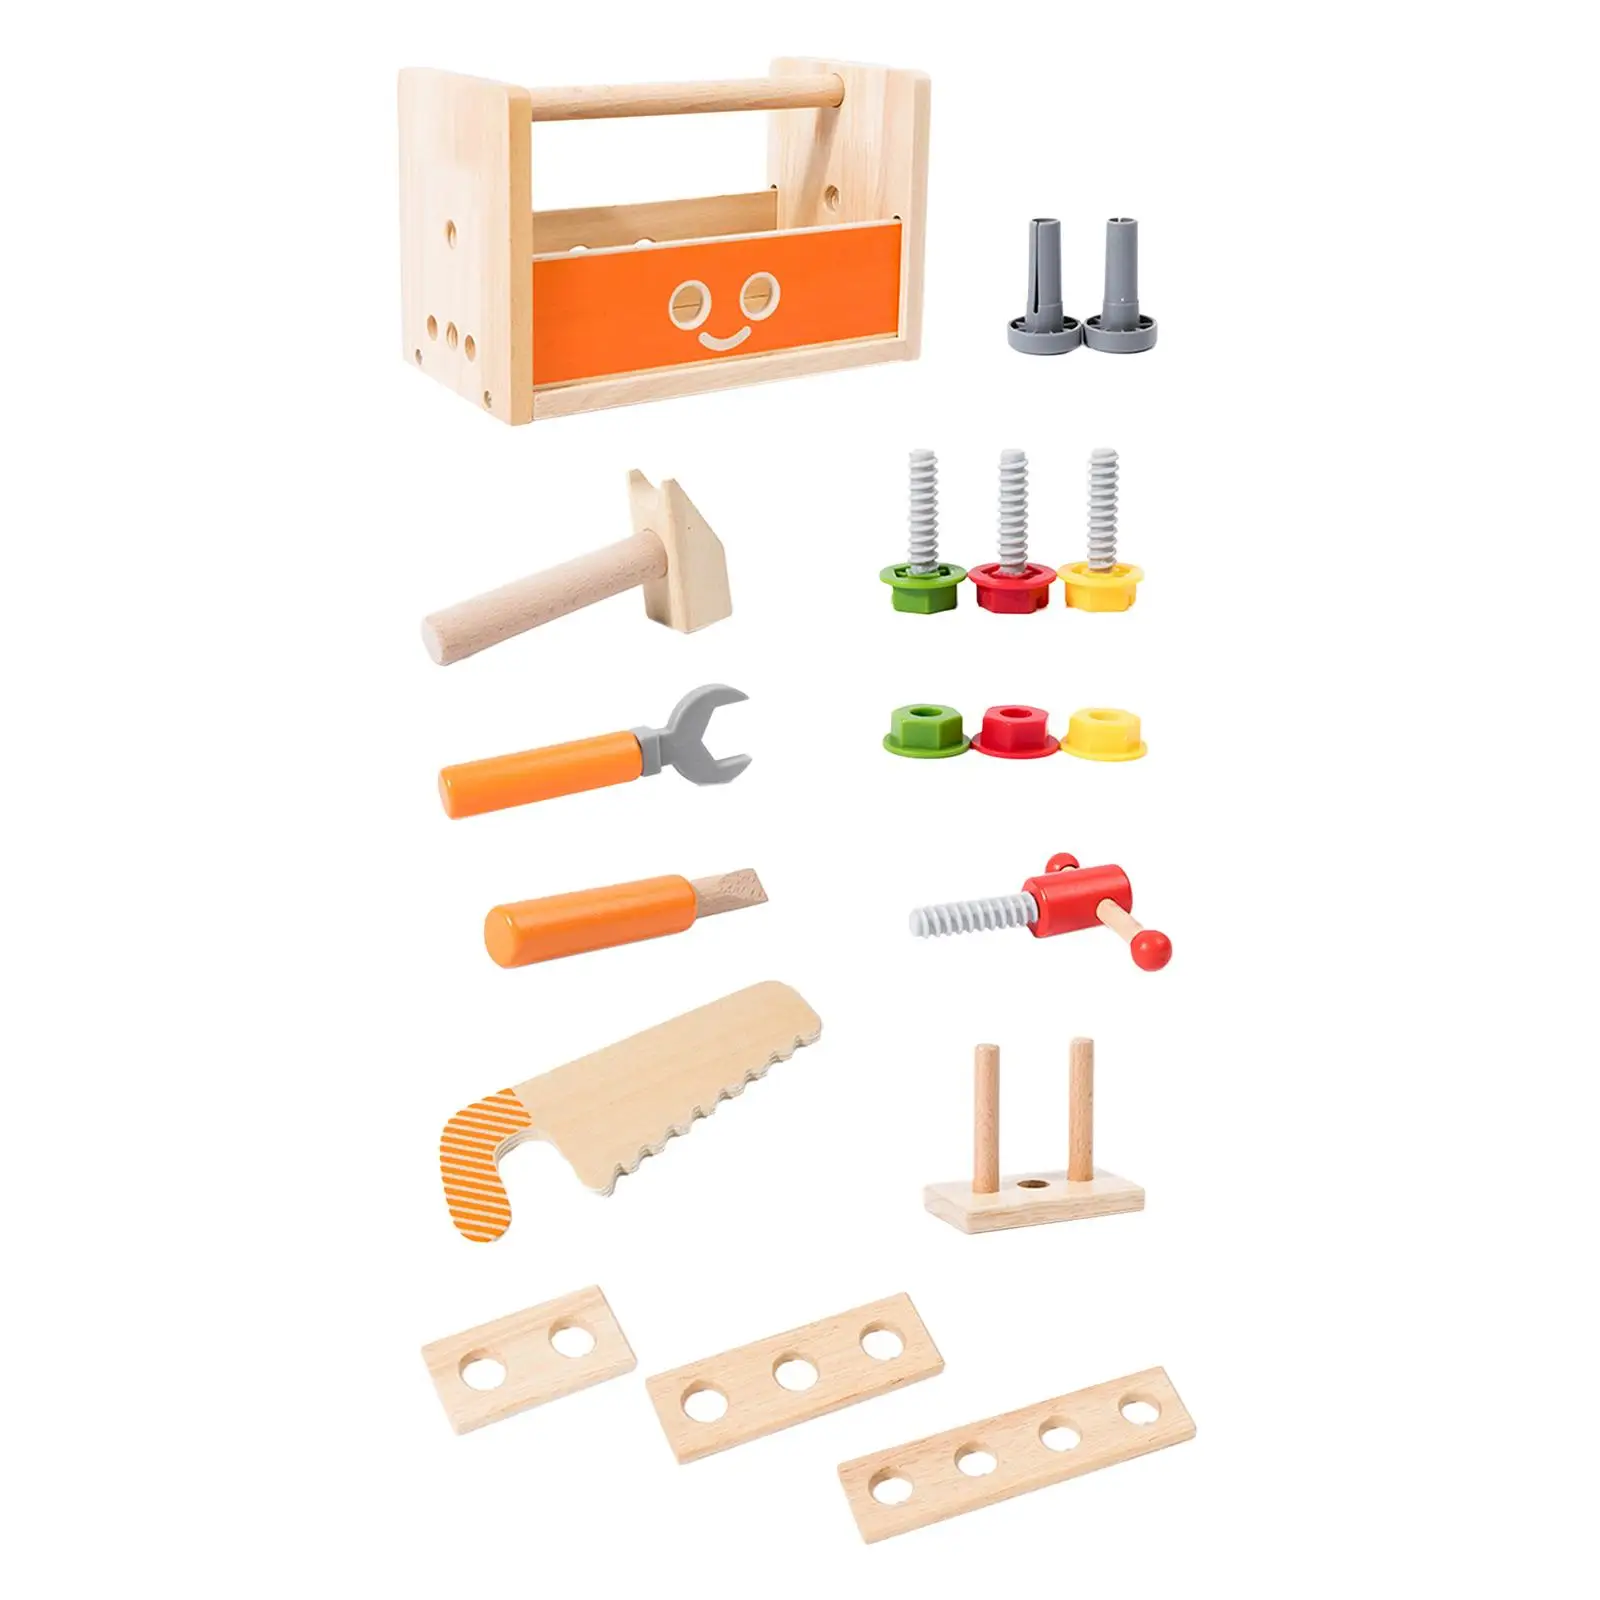 

Montessori Construction Toys Stem Educational Pretend Play Kids Tool Set for Toddlers Preschool Children Kids Birthday Gifts